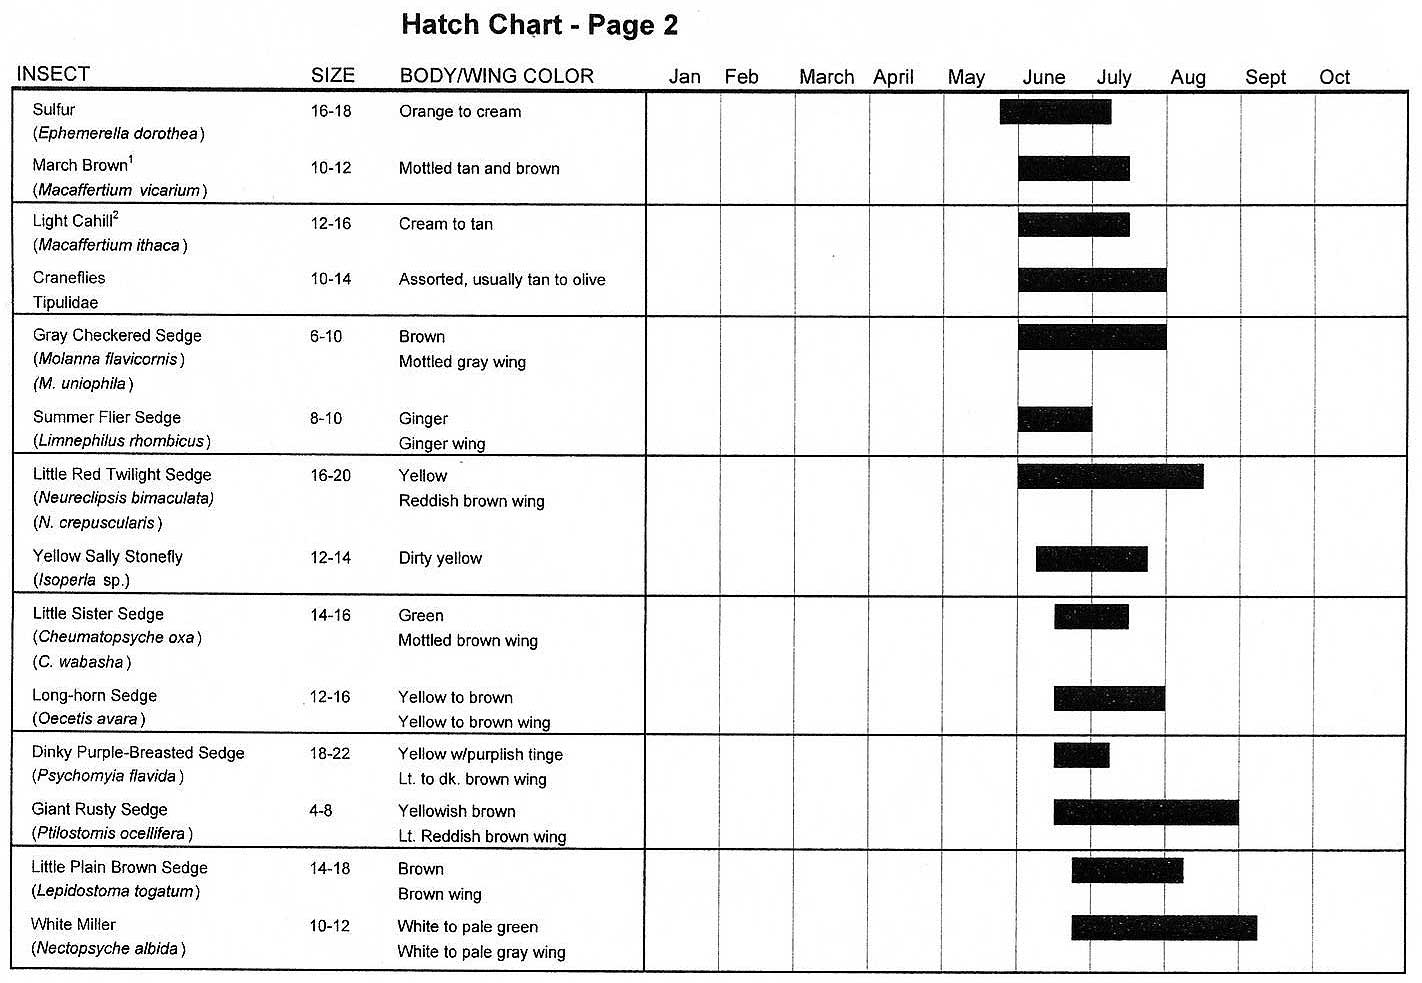 Au Hatch Chart